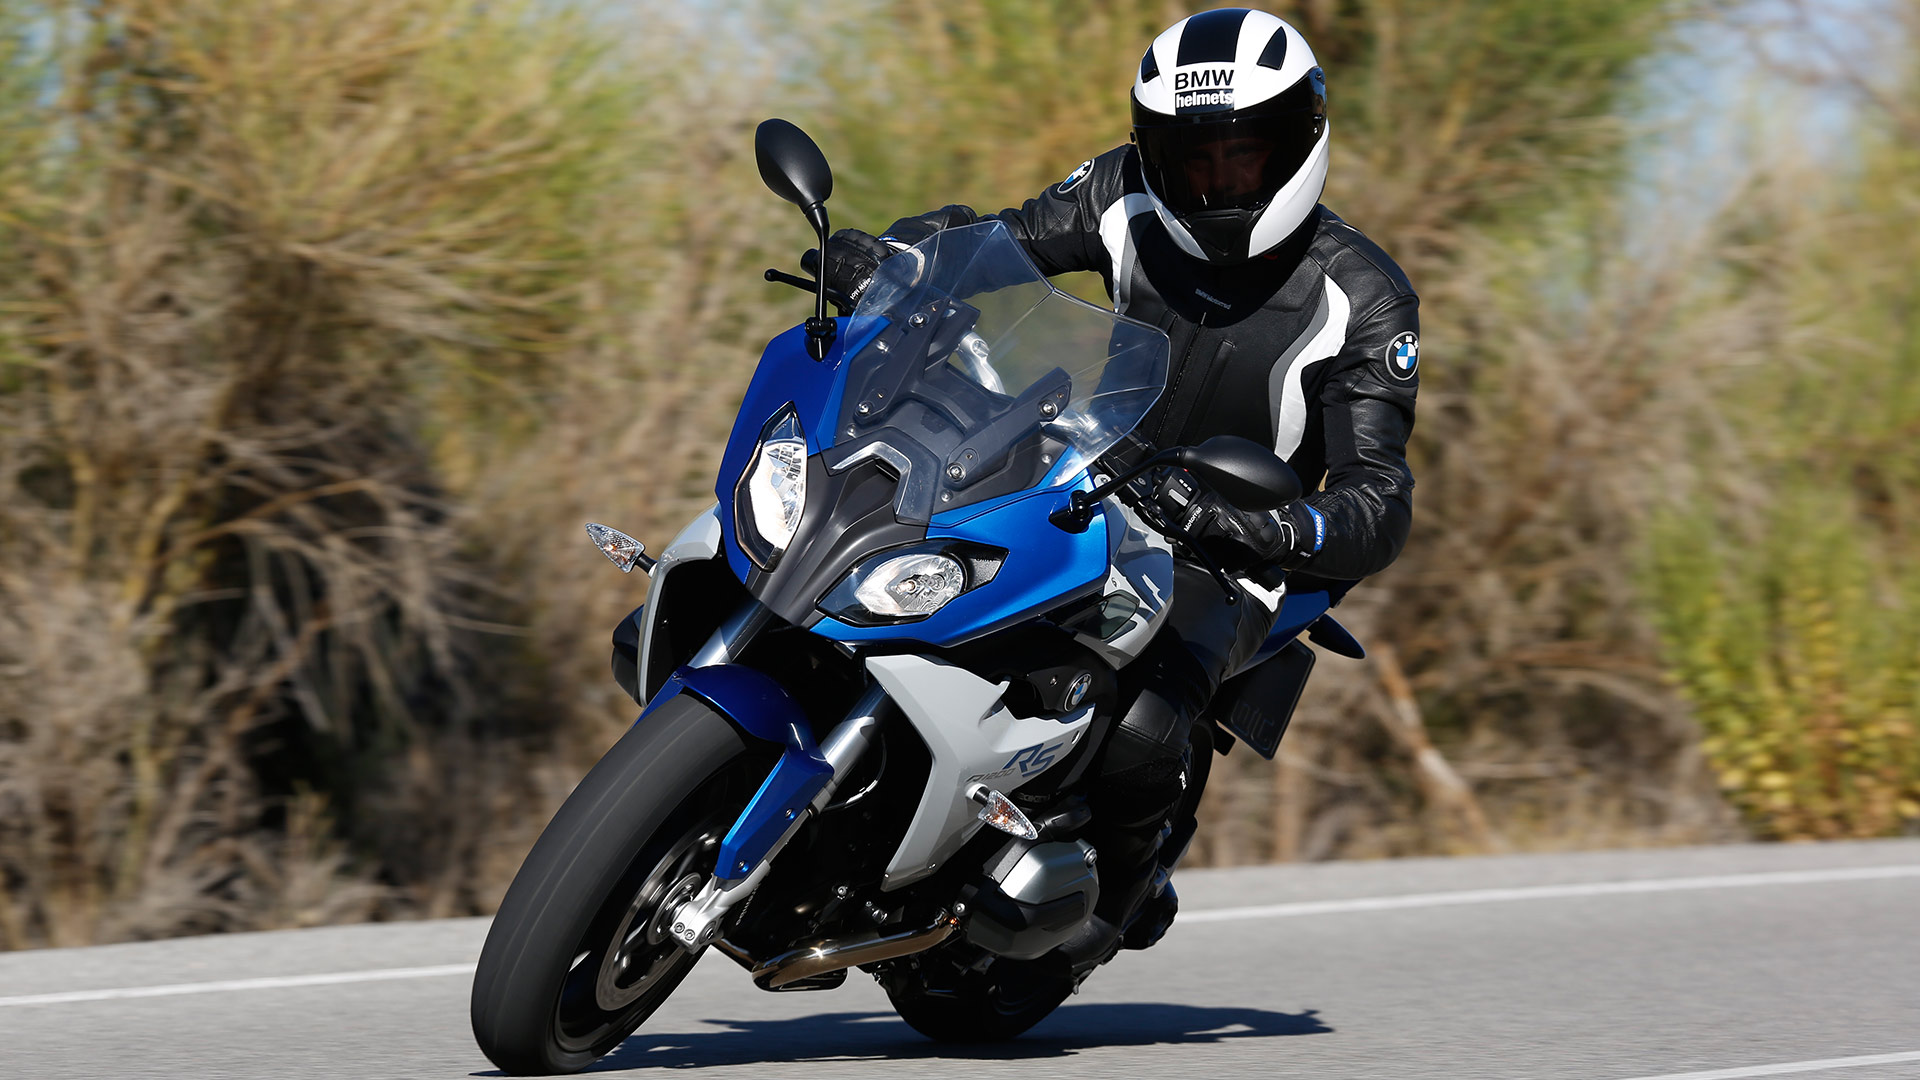 Sub-500cc TVS-BMW bikes coming in 2015